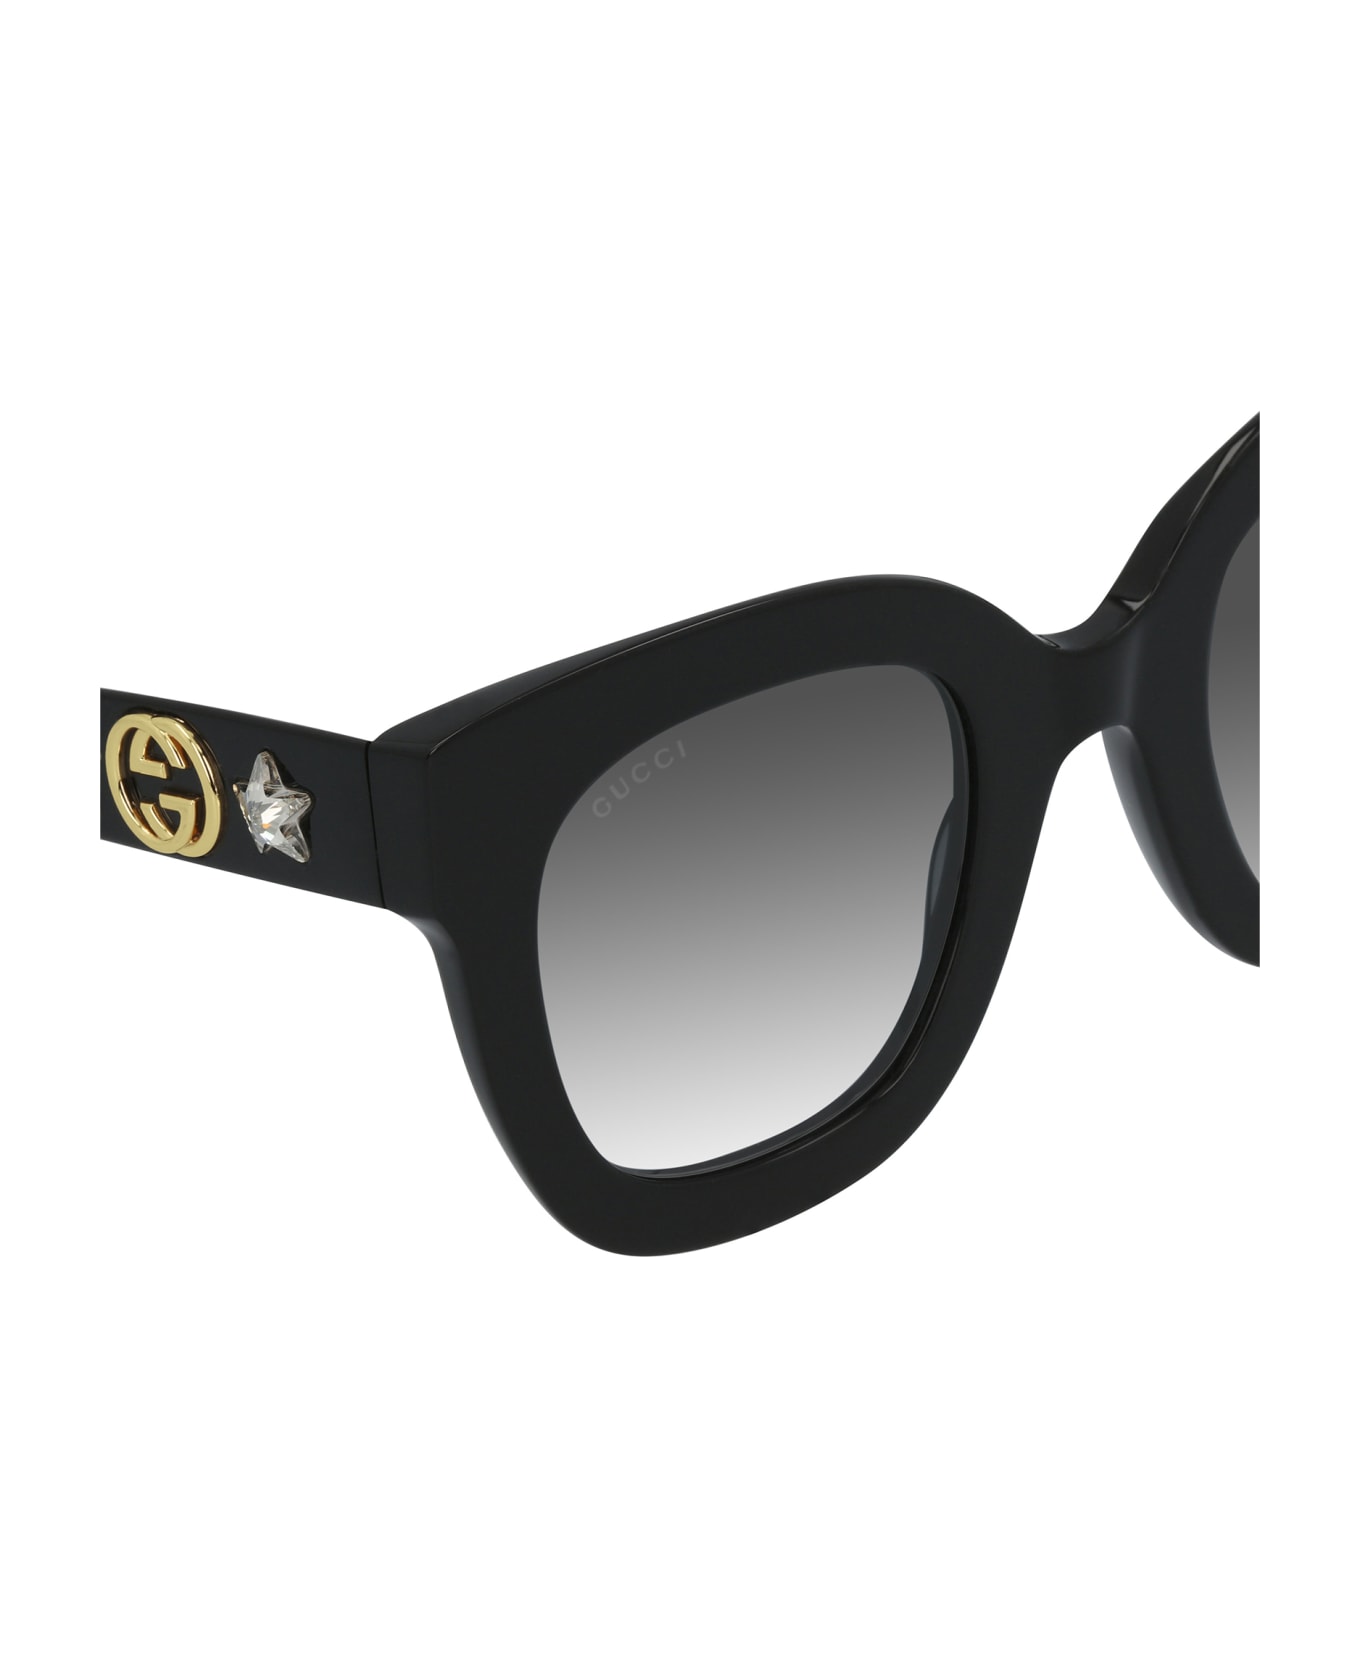 Gucci Eyewear Gg0208s Black Sunglasses - Black